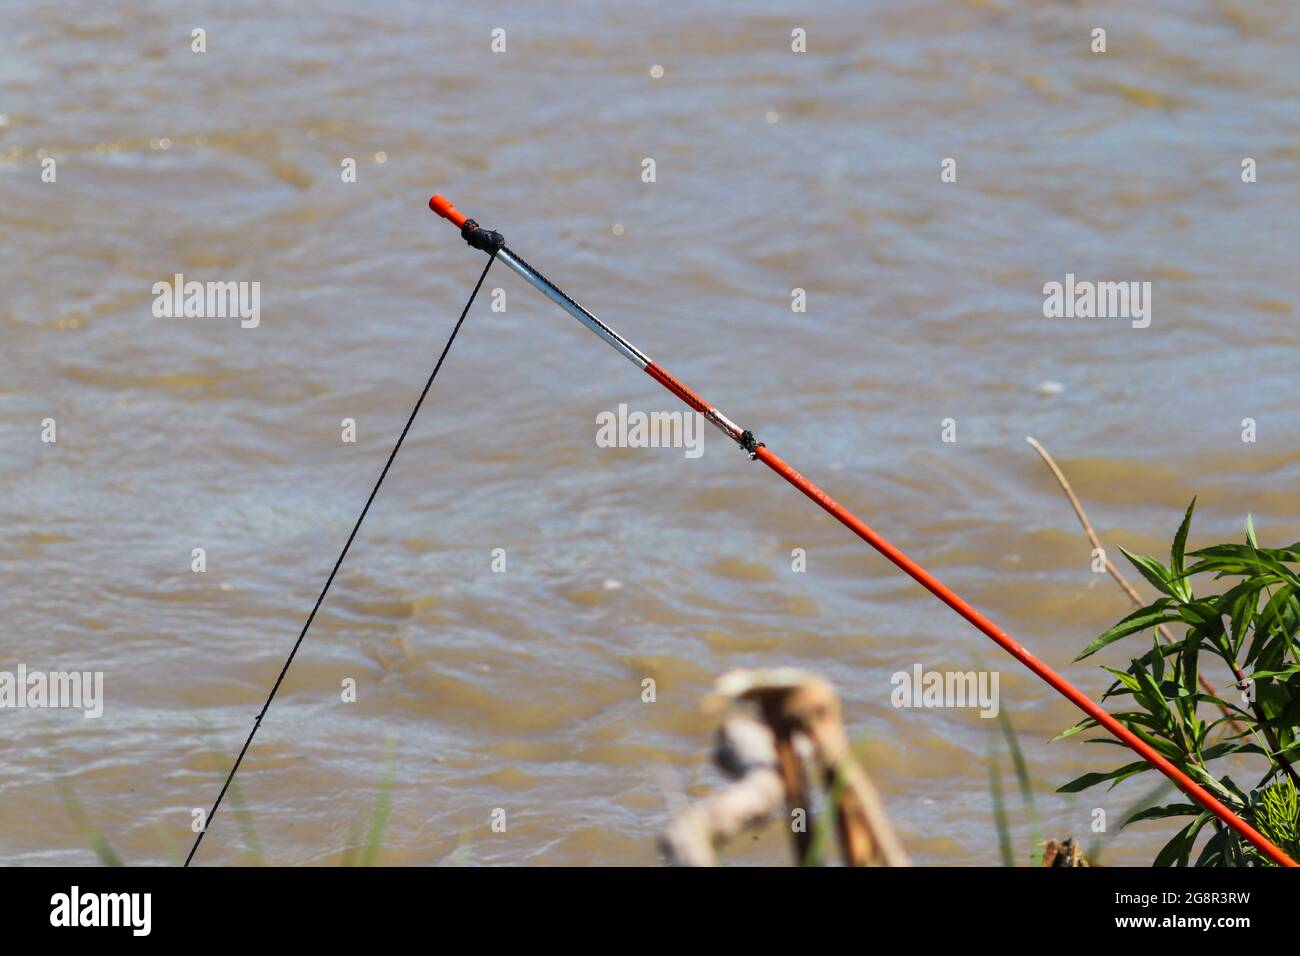 https://c8.alamy.com/comp/2G8R3RW/catfish-with-set-line-fishing-alone-the-niobrara-river-in-nebraska-high-quality-photo-2G8R3RW.jpg